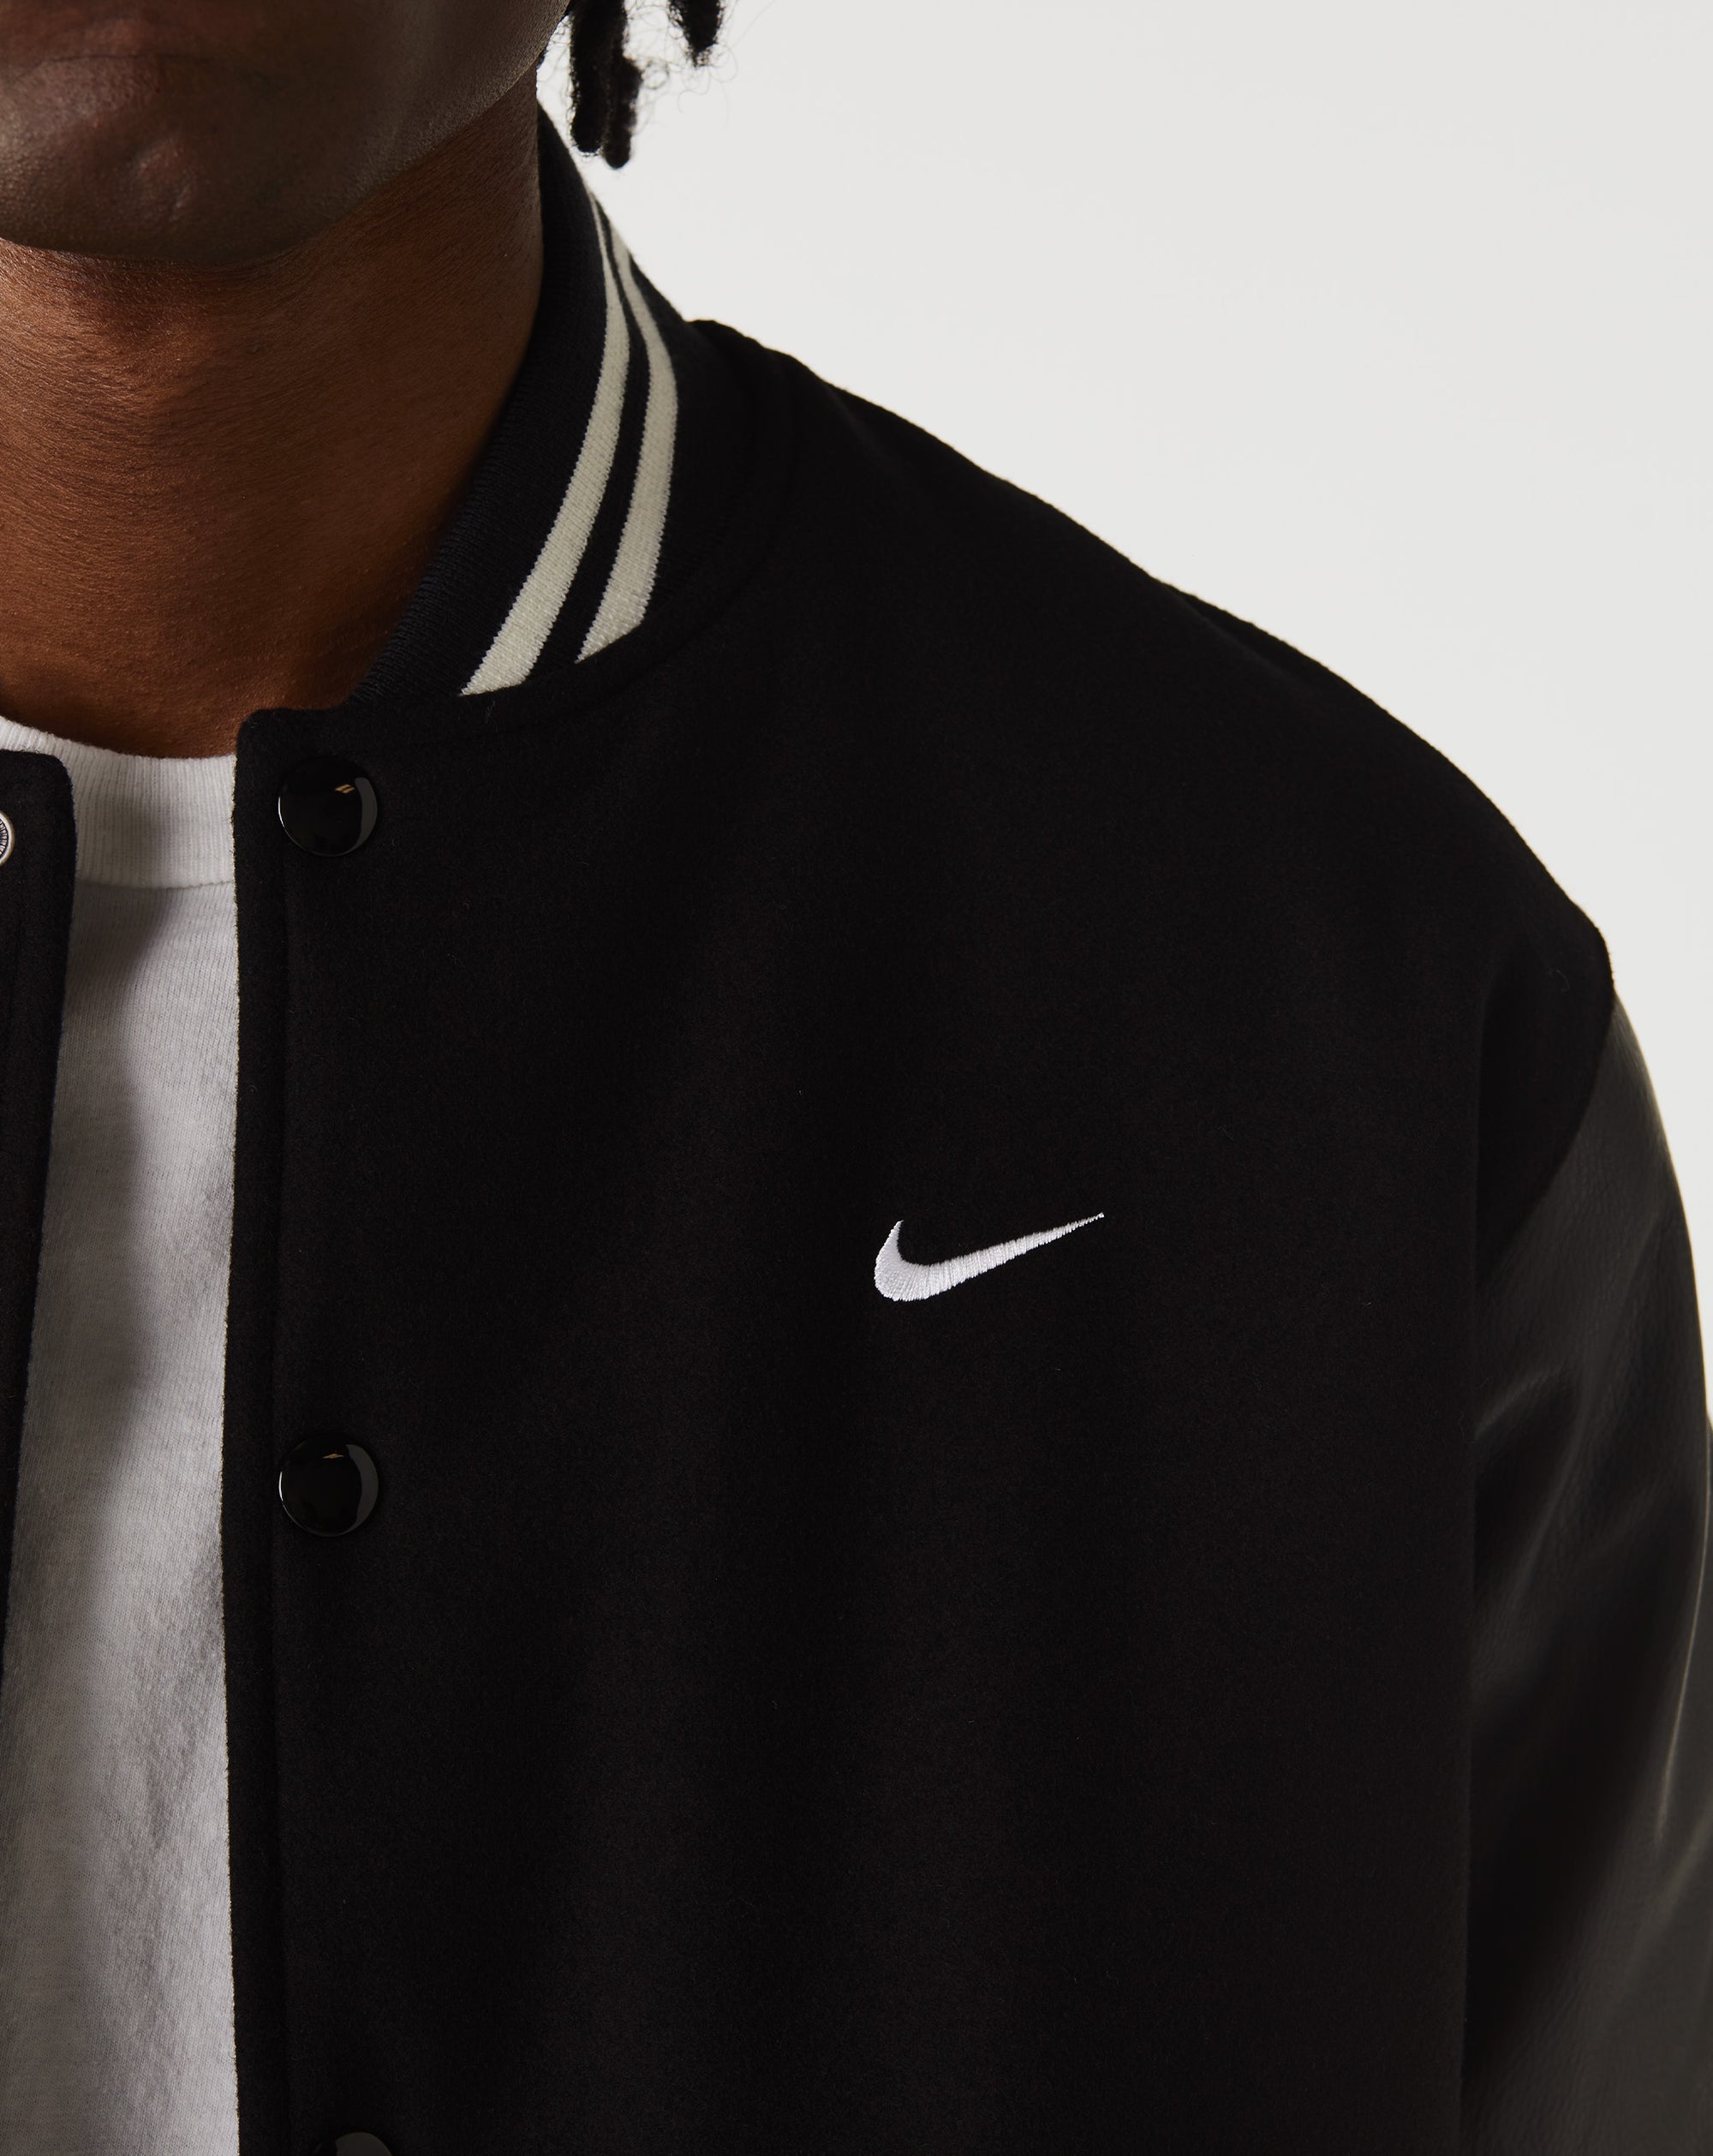 Nike Nike Authentics Varsity Jacket - Rule of Next Apparel